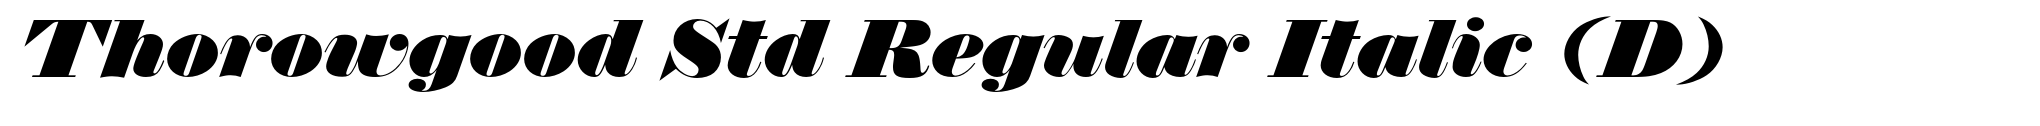 Thorowgood Std Regular Italic (D) image